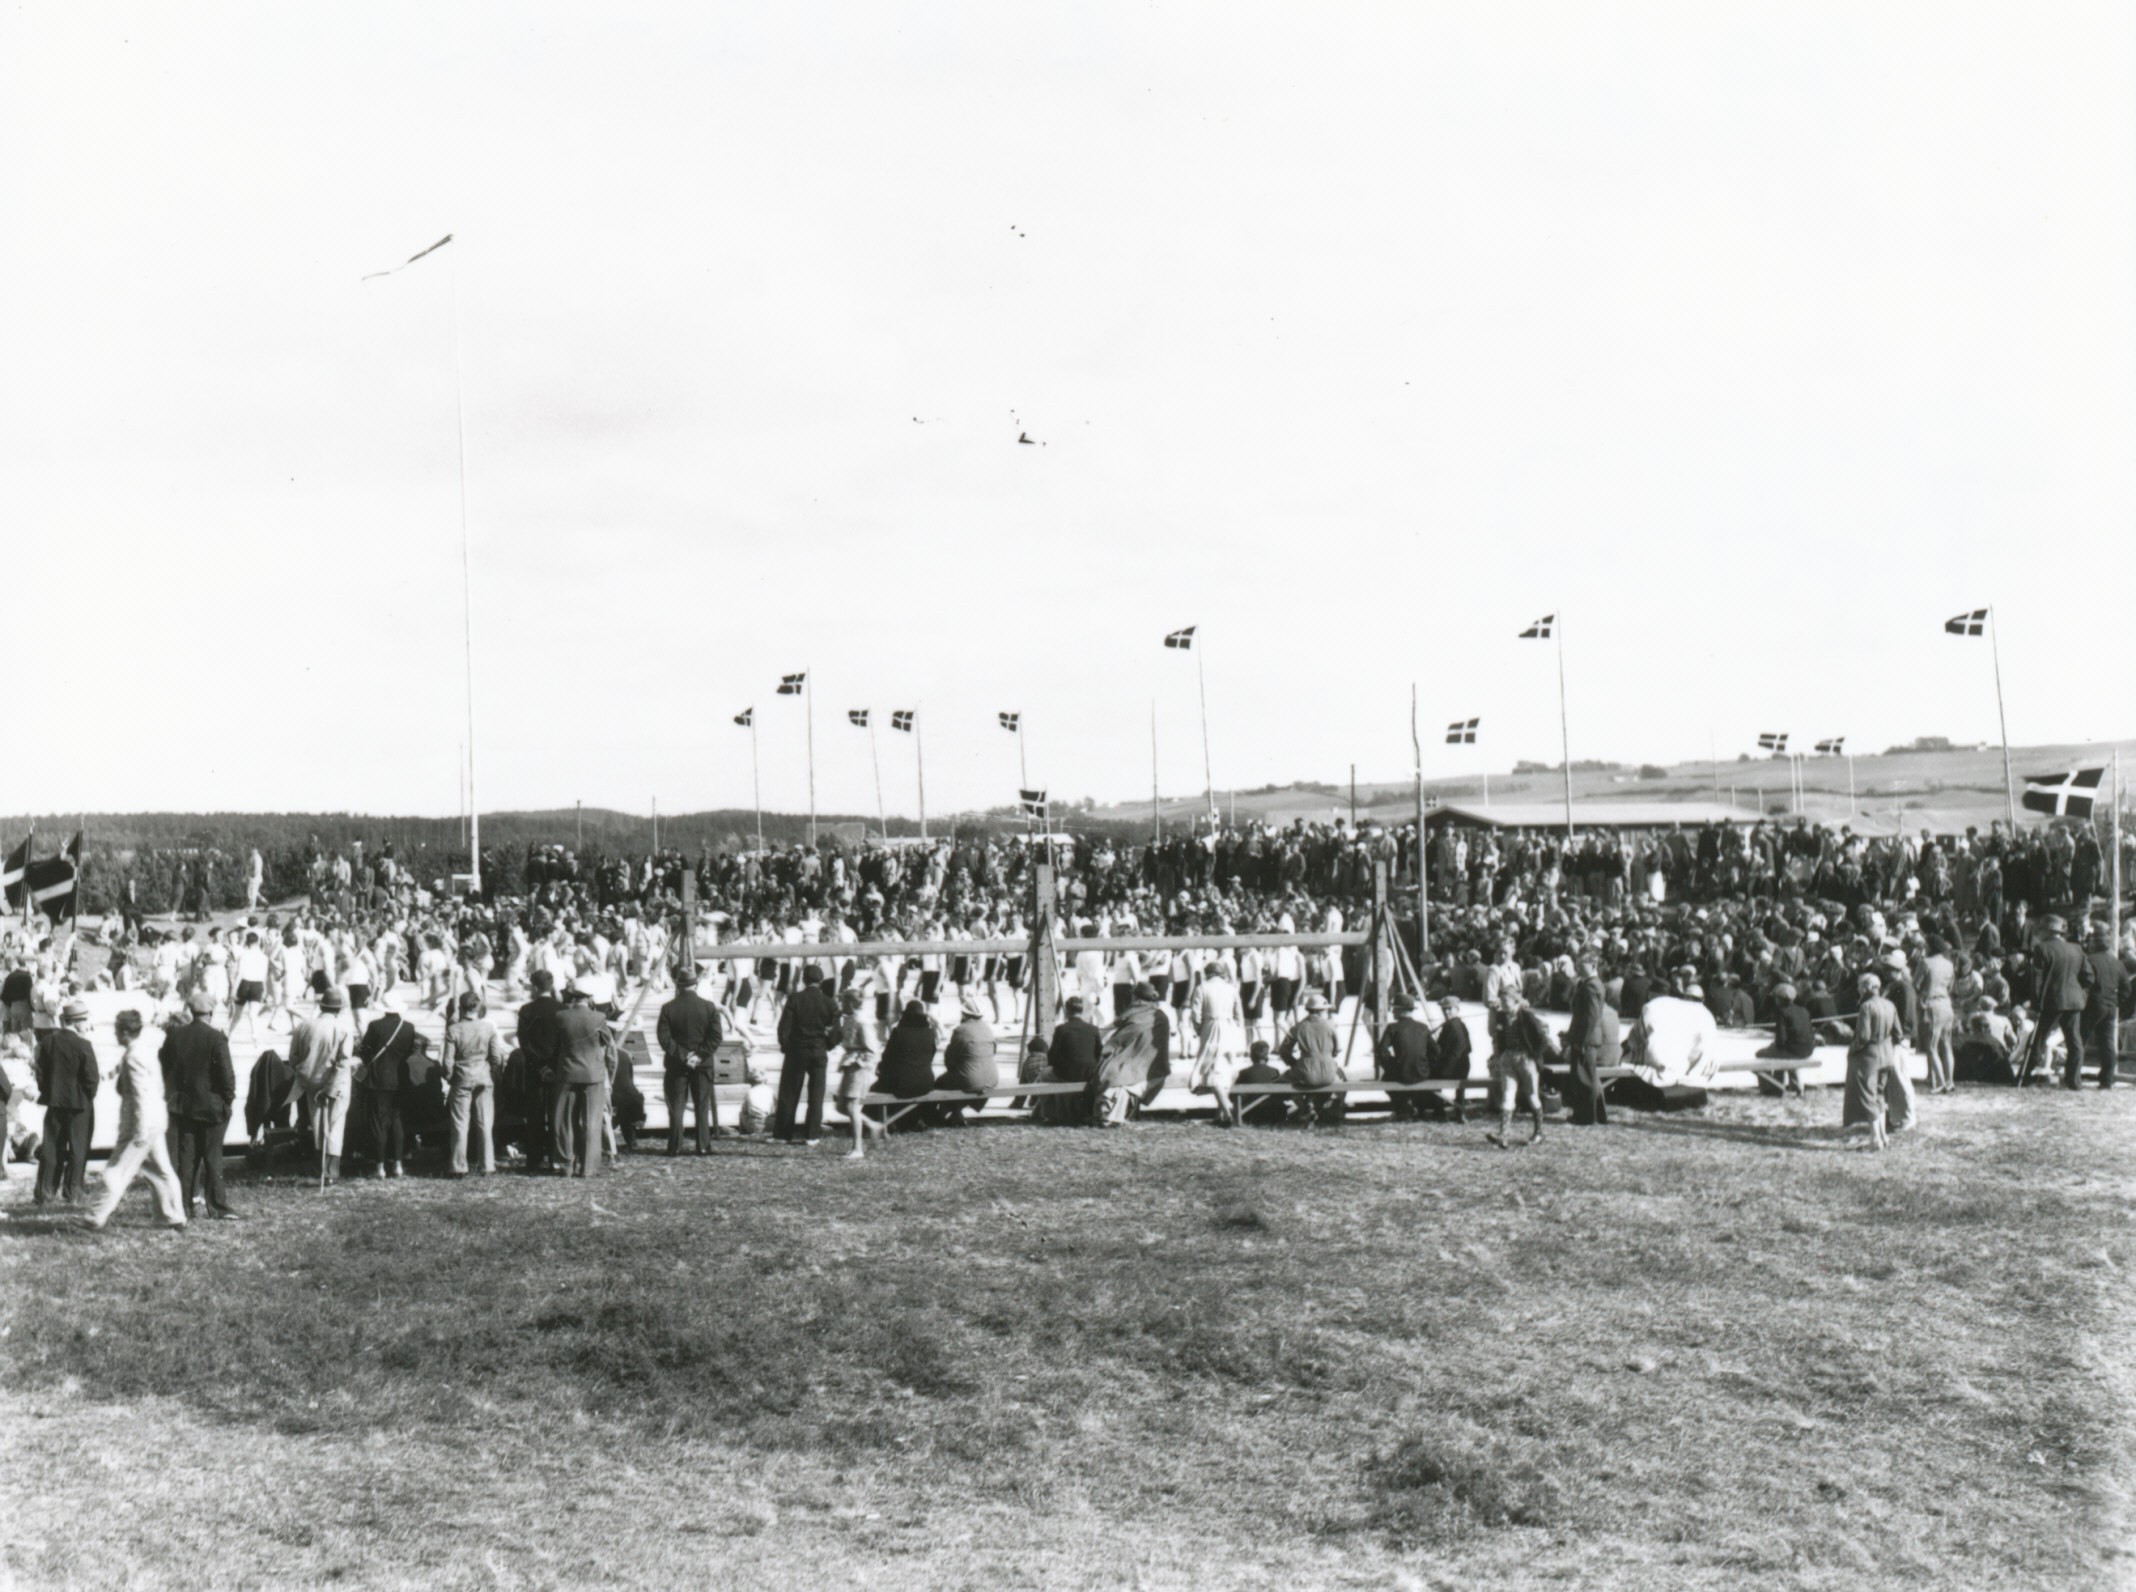 Høvestævne - Publikum overværer gymnastikopvisning på bræddegulvet - 1938 (B2452)